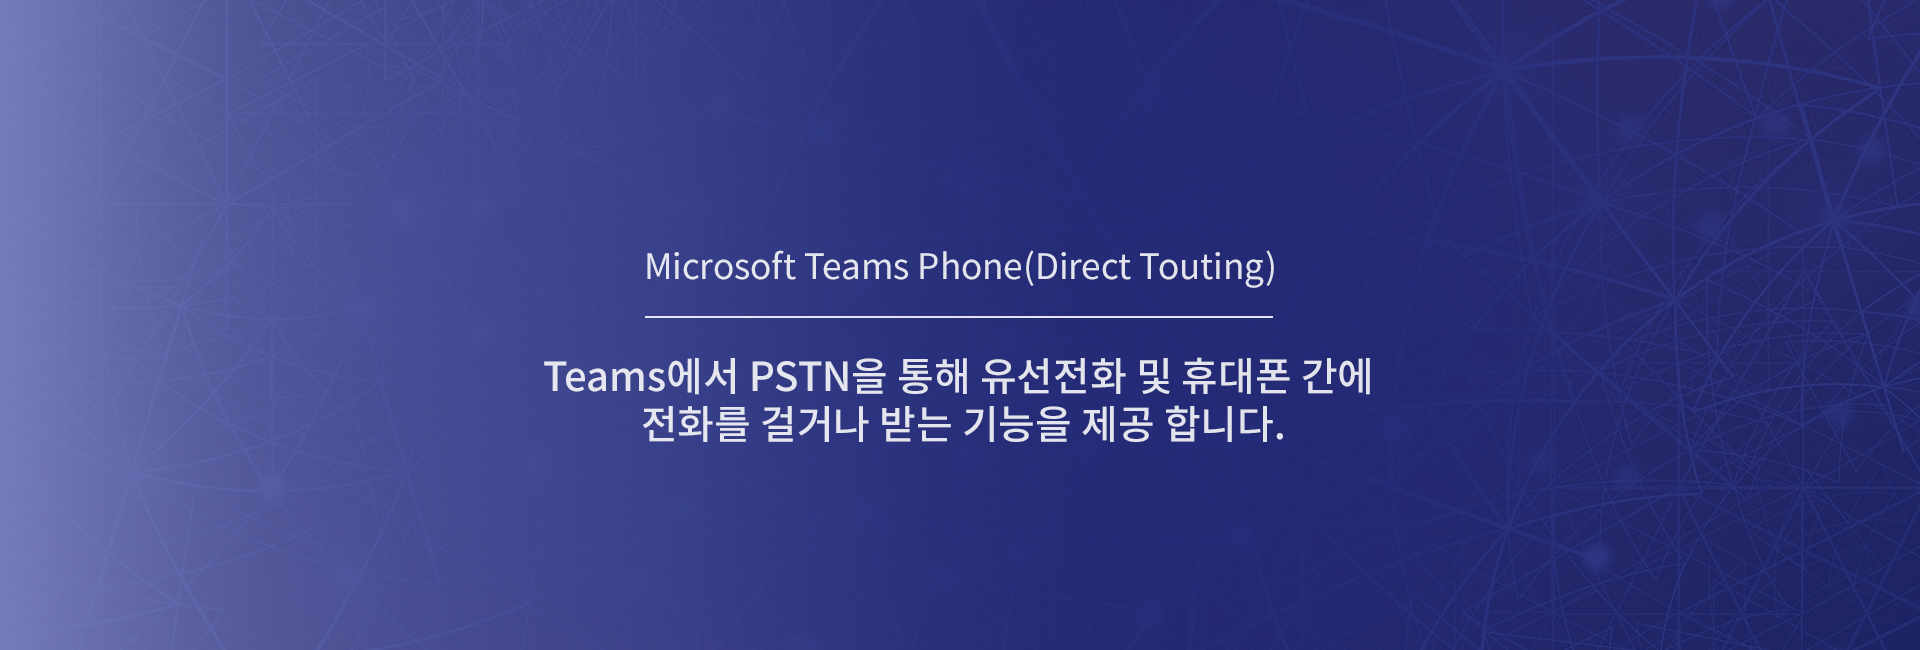 Microsoft Teams phone